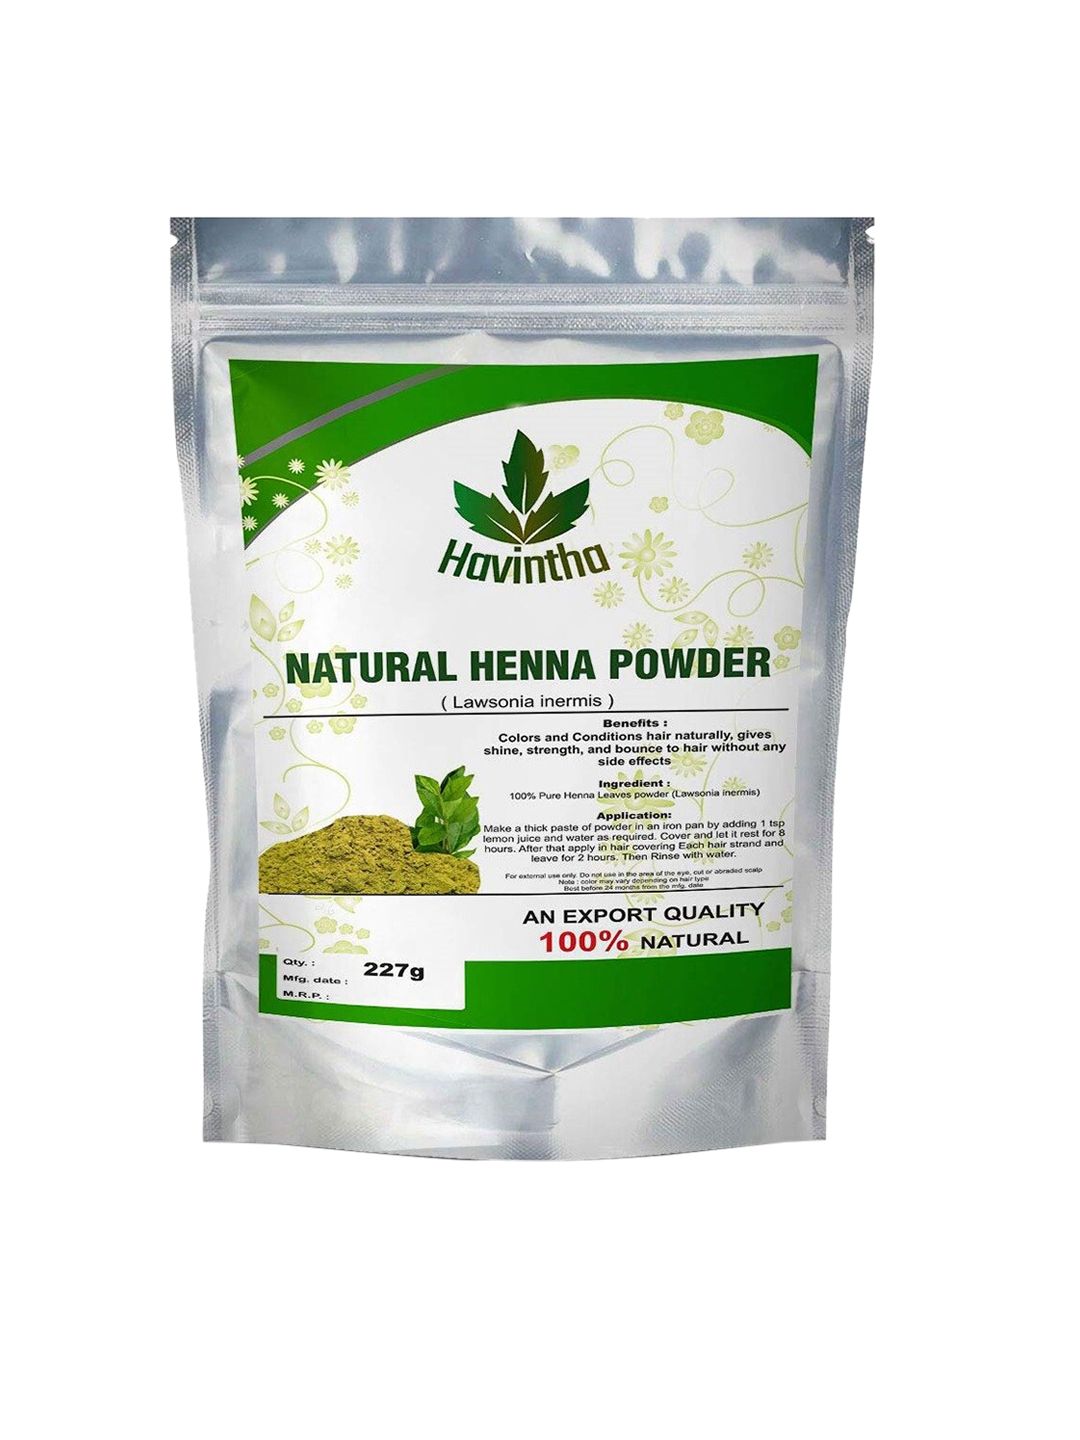 Havintha Natural Lawsonia Inermis Henna Powder 227 g Price in India